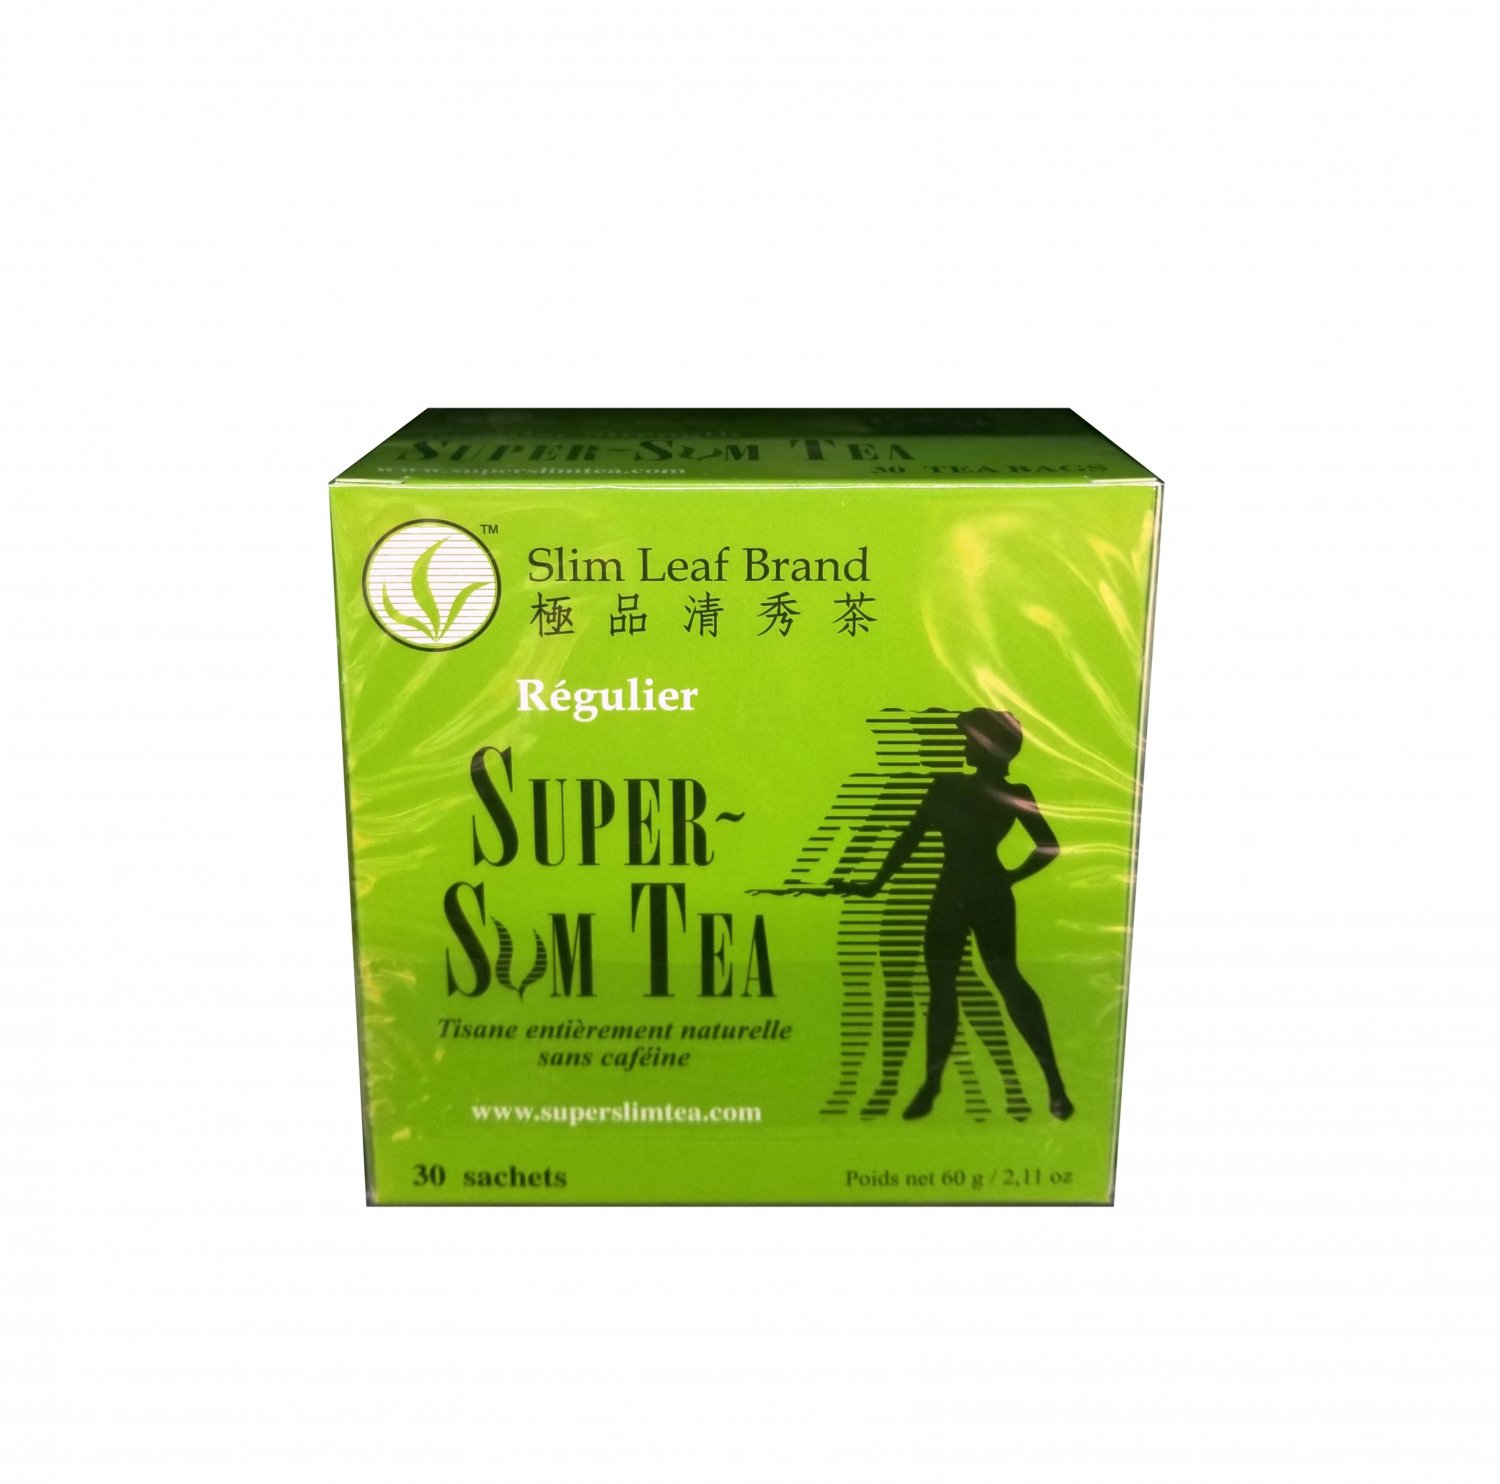 Slim Leaf Brand Super Slim Tea Weight Loss Dieters tea 30 tea bags 2.11 oz